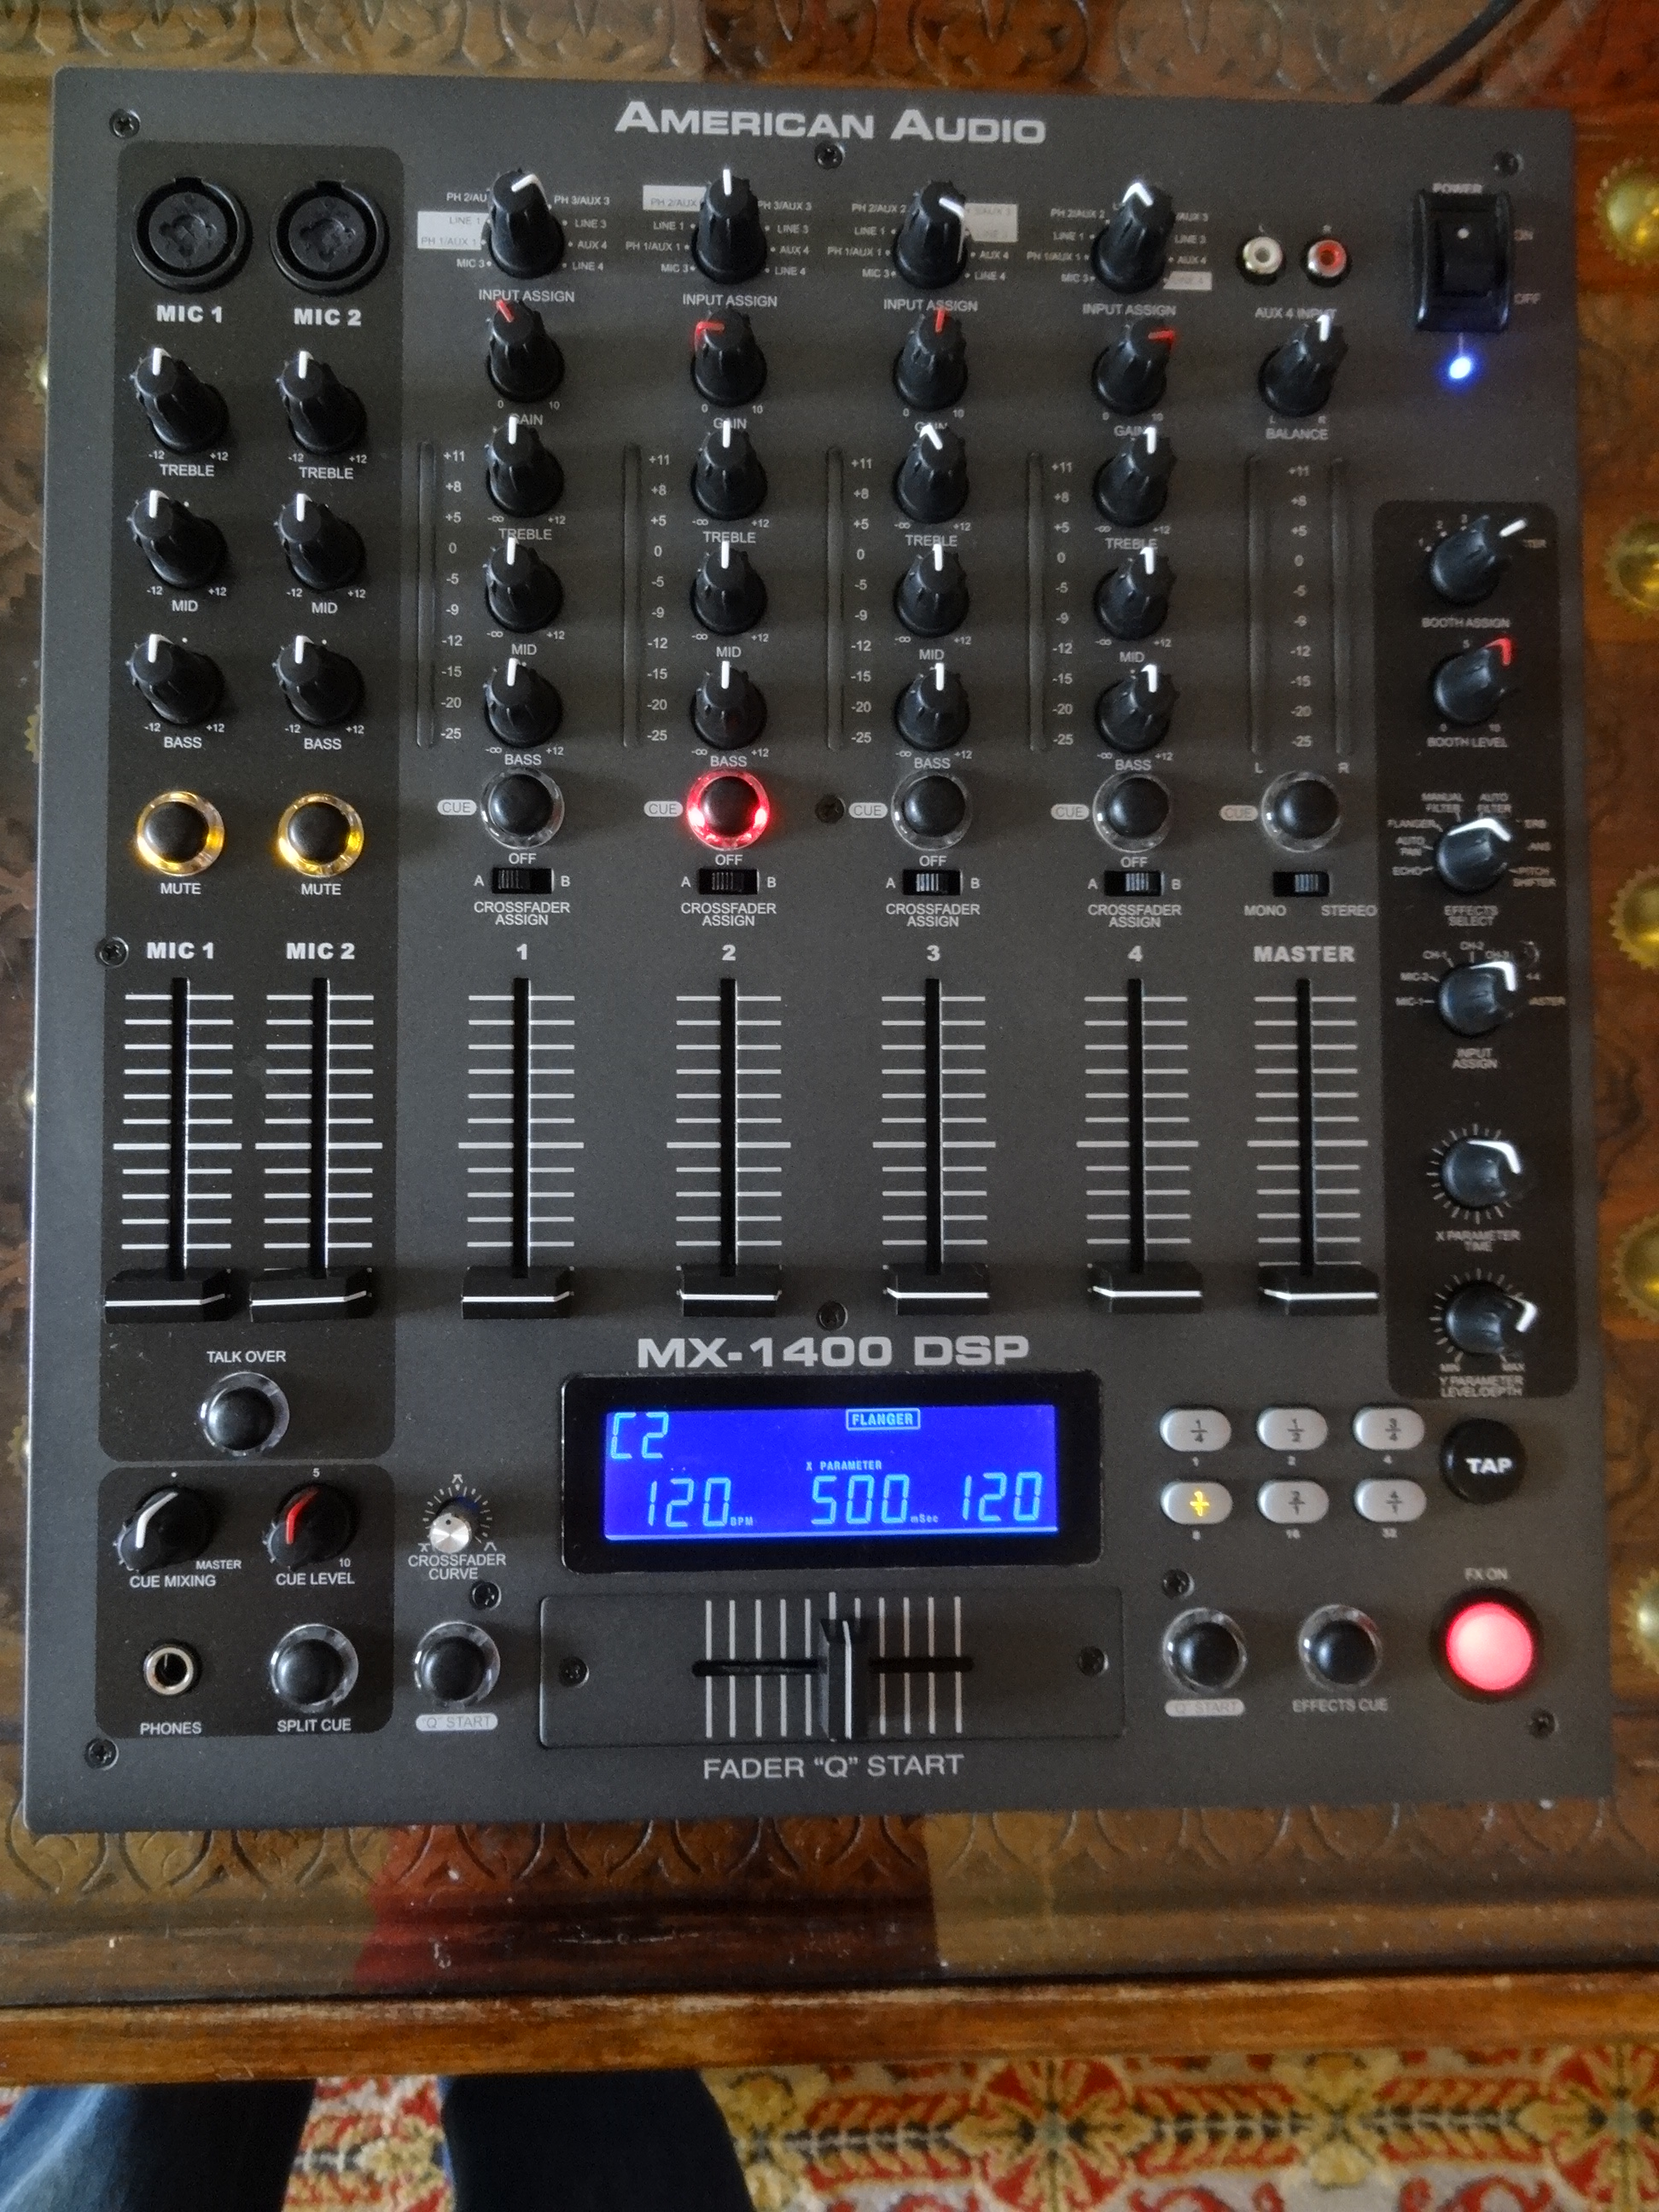 Numark EM-460 Professional DJ Mixer with Kaoss Pad Multi Effects Processor